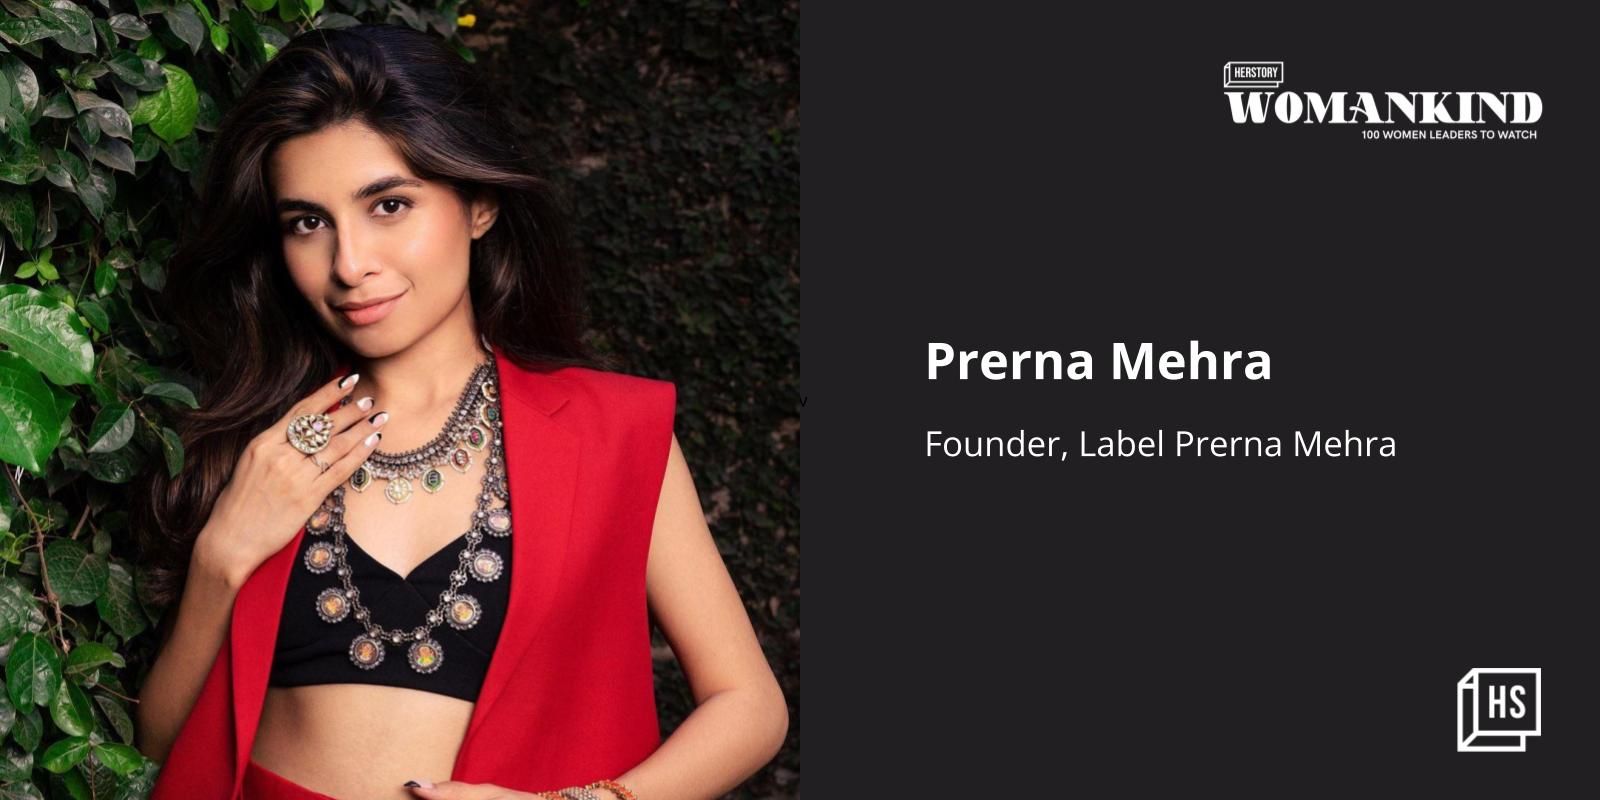 100 Emerging Women Leaders] Meet Prerna Mehra, who started an ...